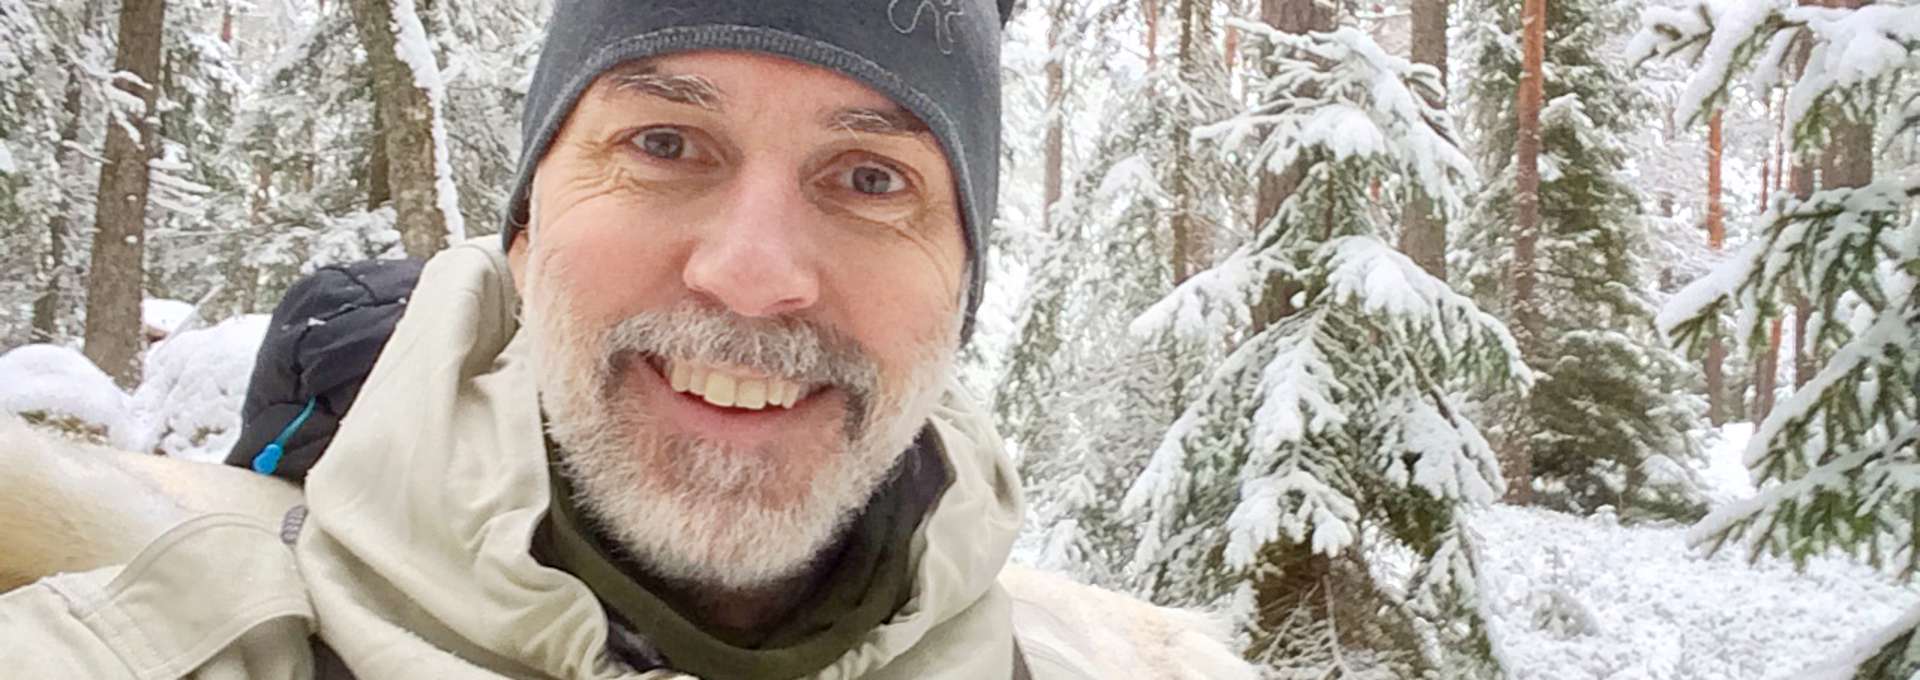 En selfie på en leende man i en snöig granskog. 